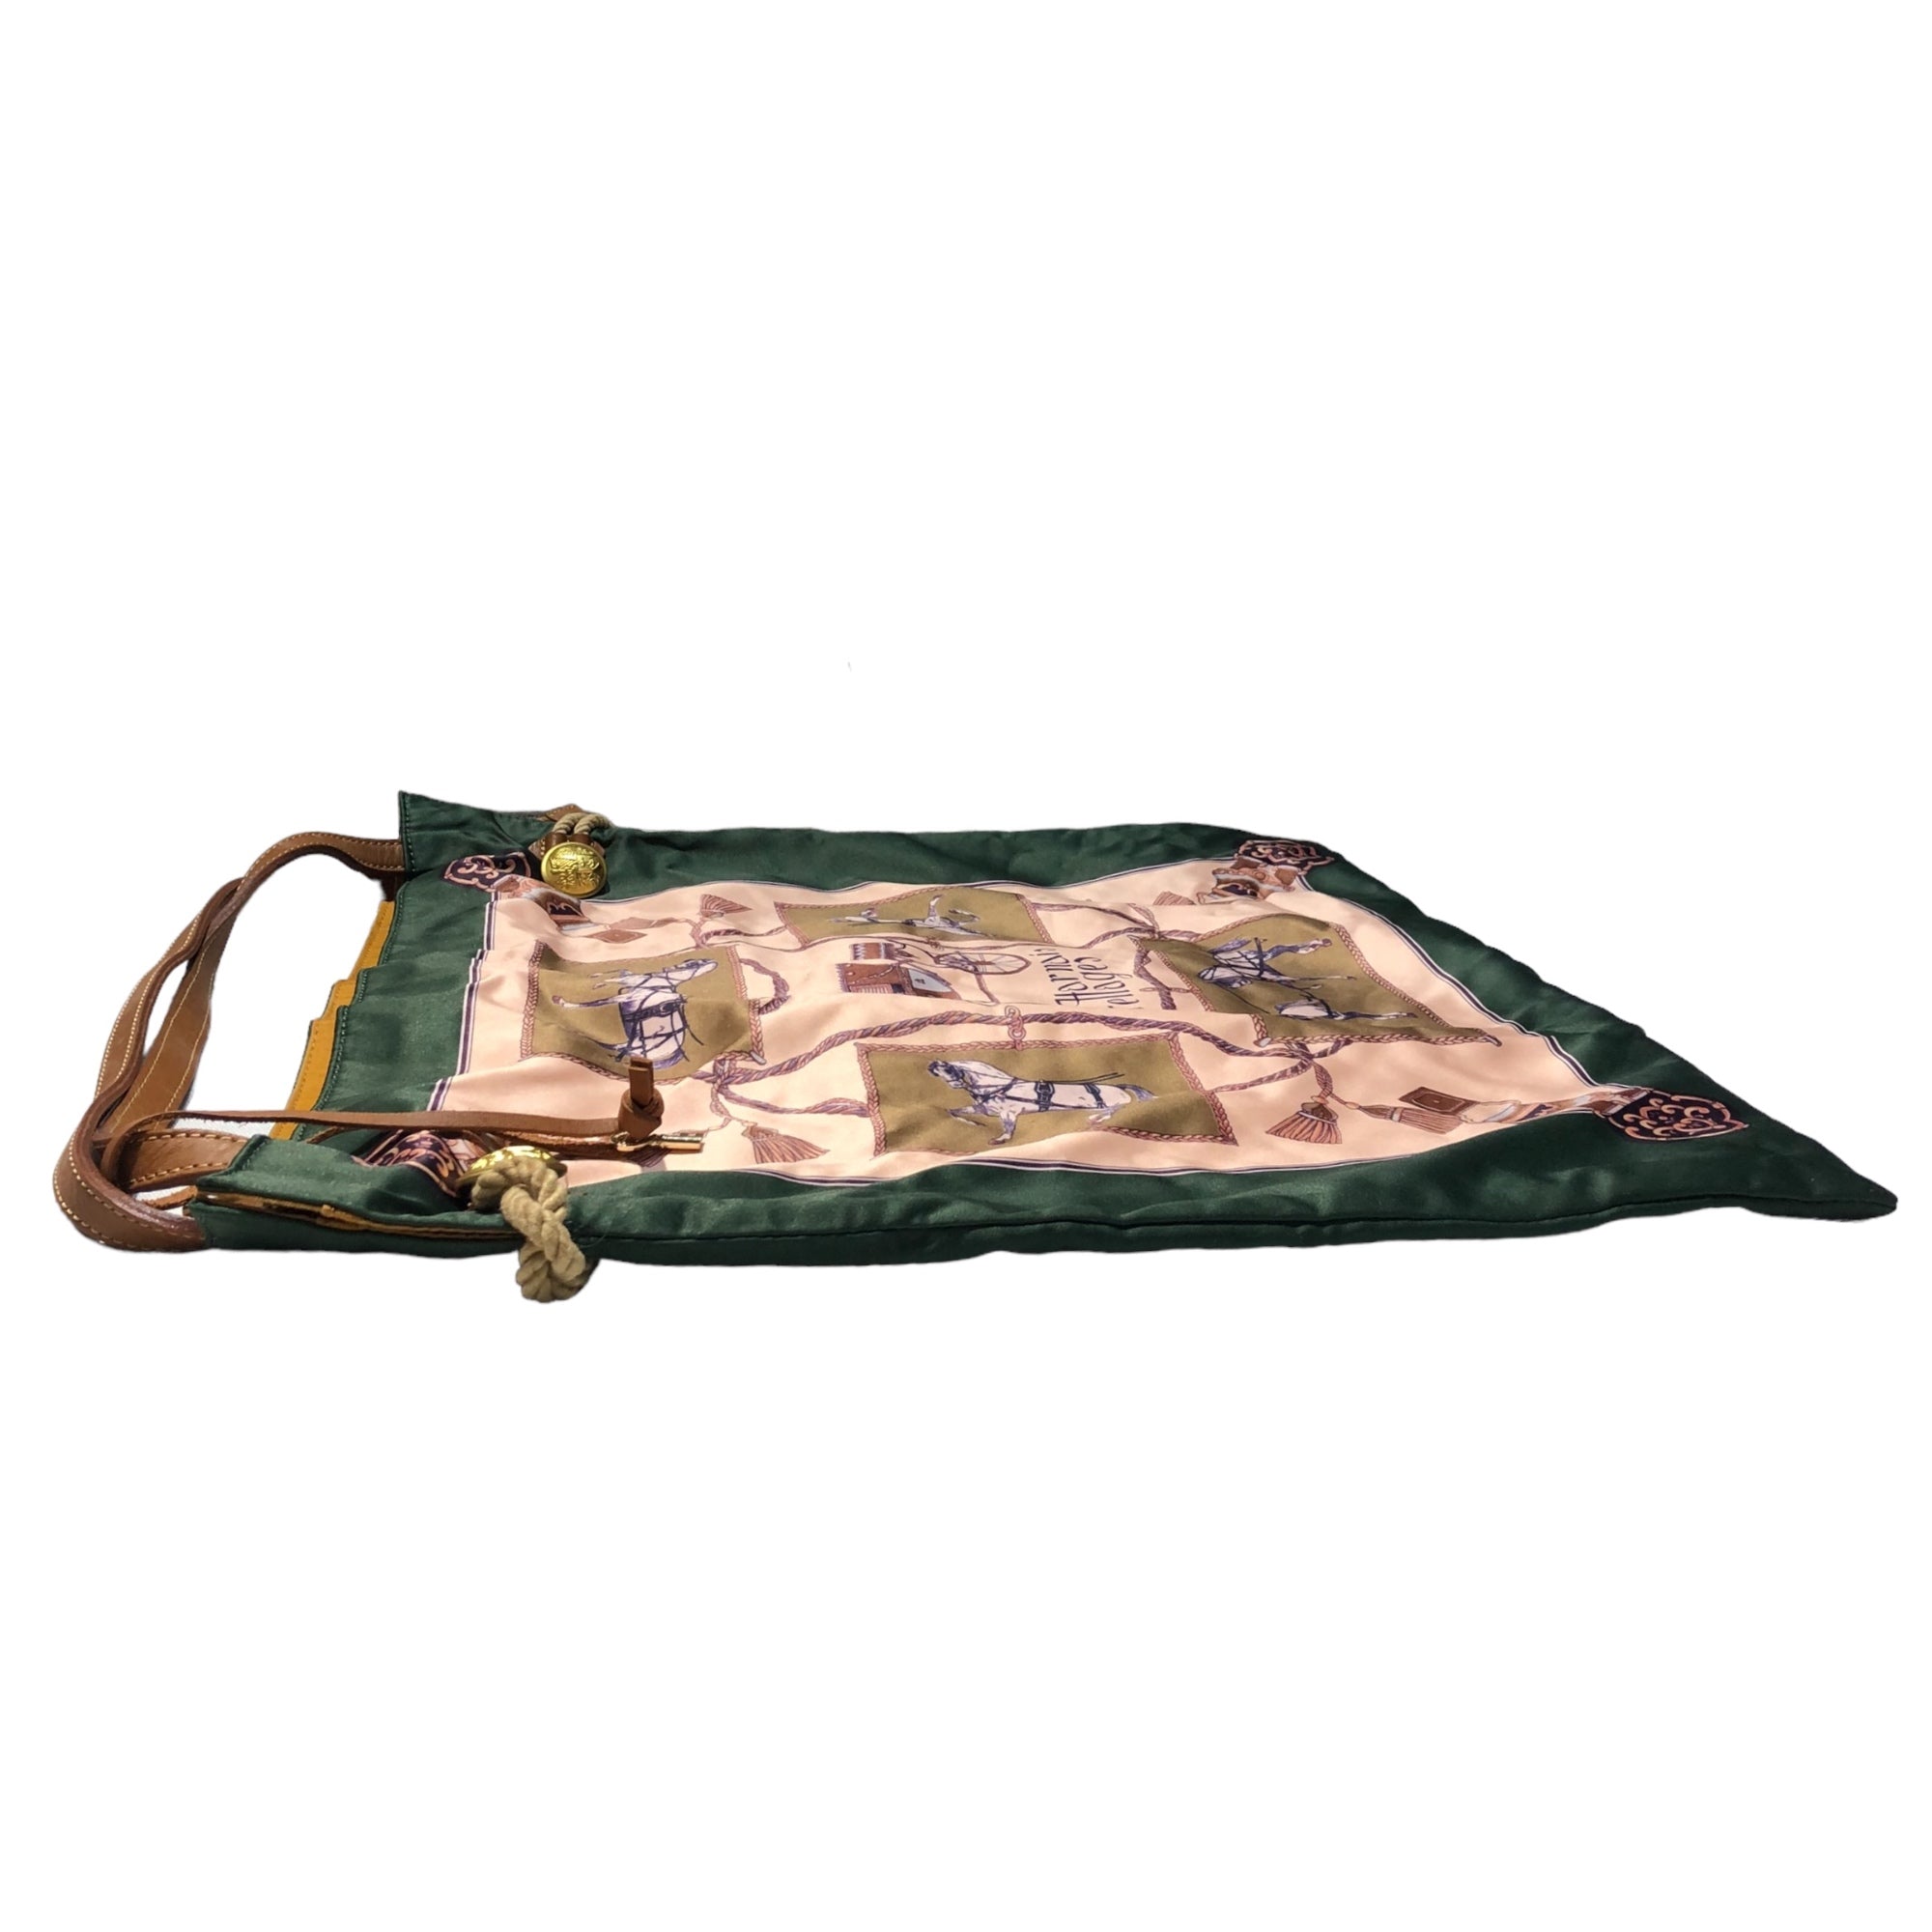 TOPKAPI(トプカピ) スカーフ 柄 トート バッグ ハンドバッグ 大き目 ベージュ×グリーン